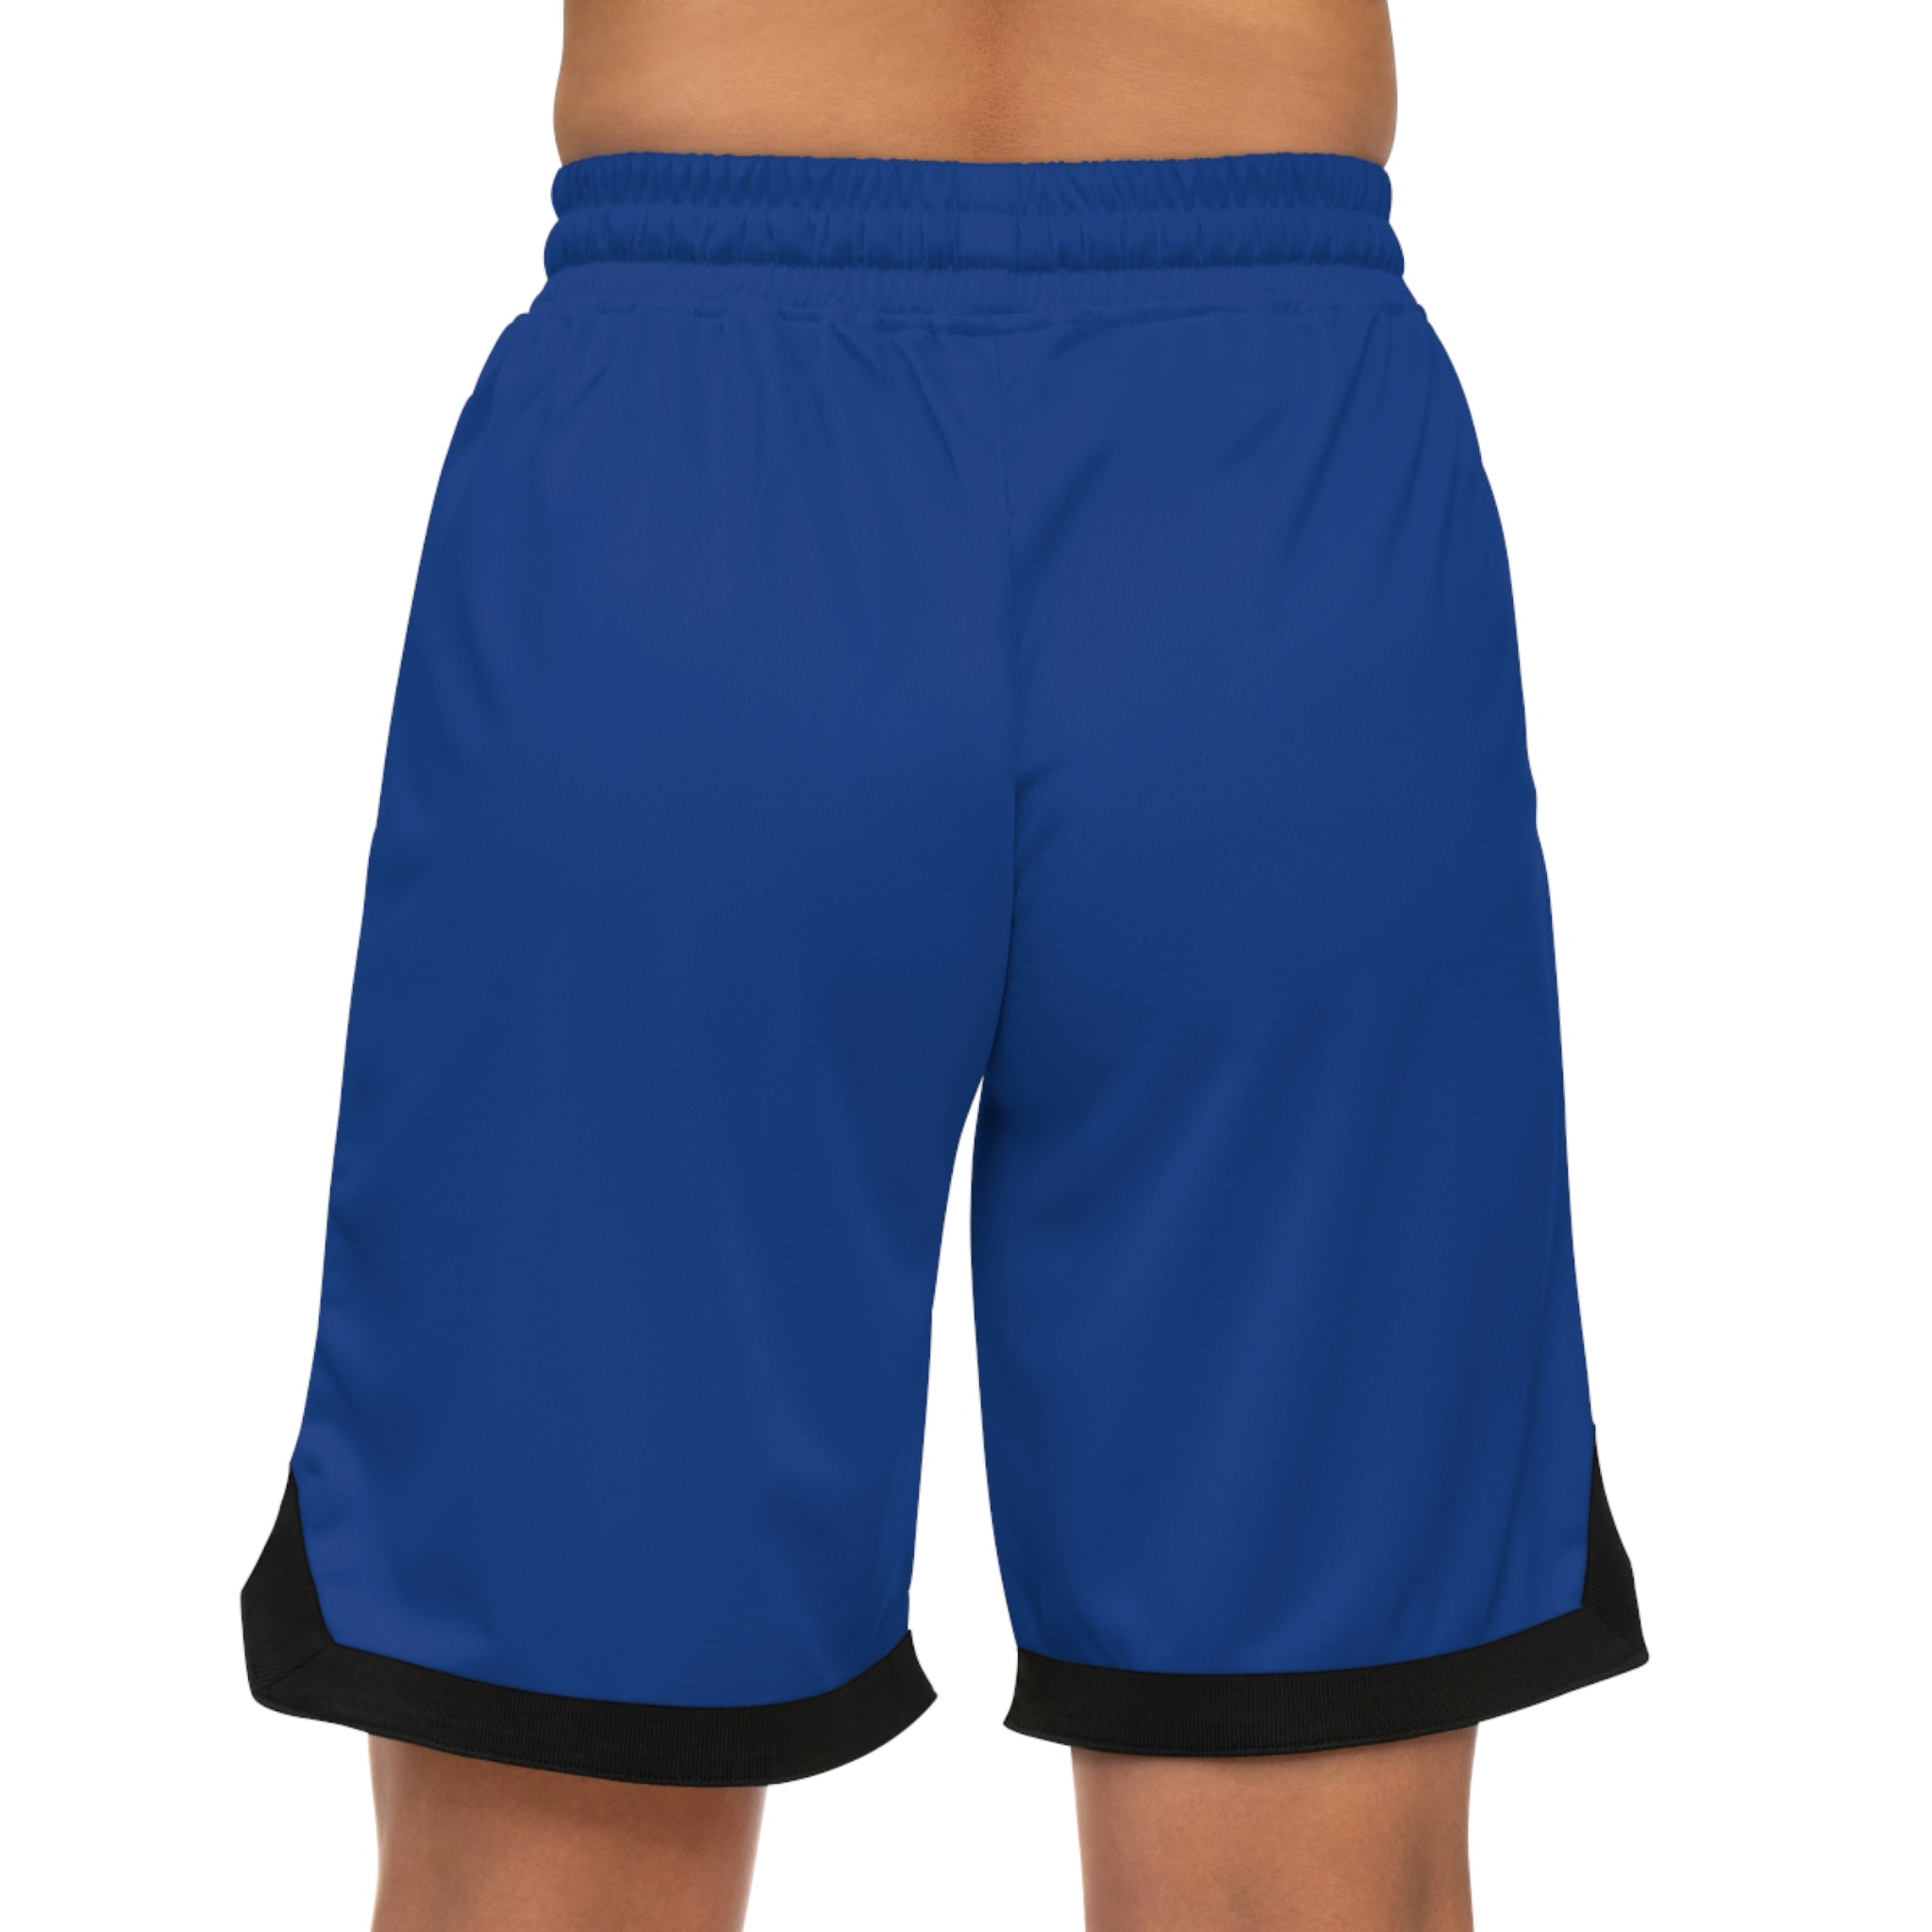 Combinedminds Basketball Shorts Royal Blue/Black Logo